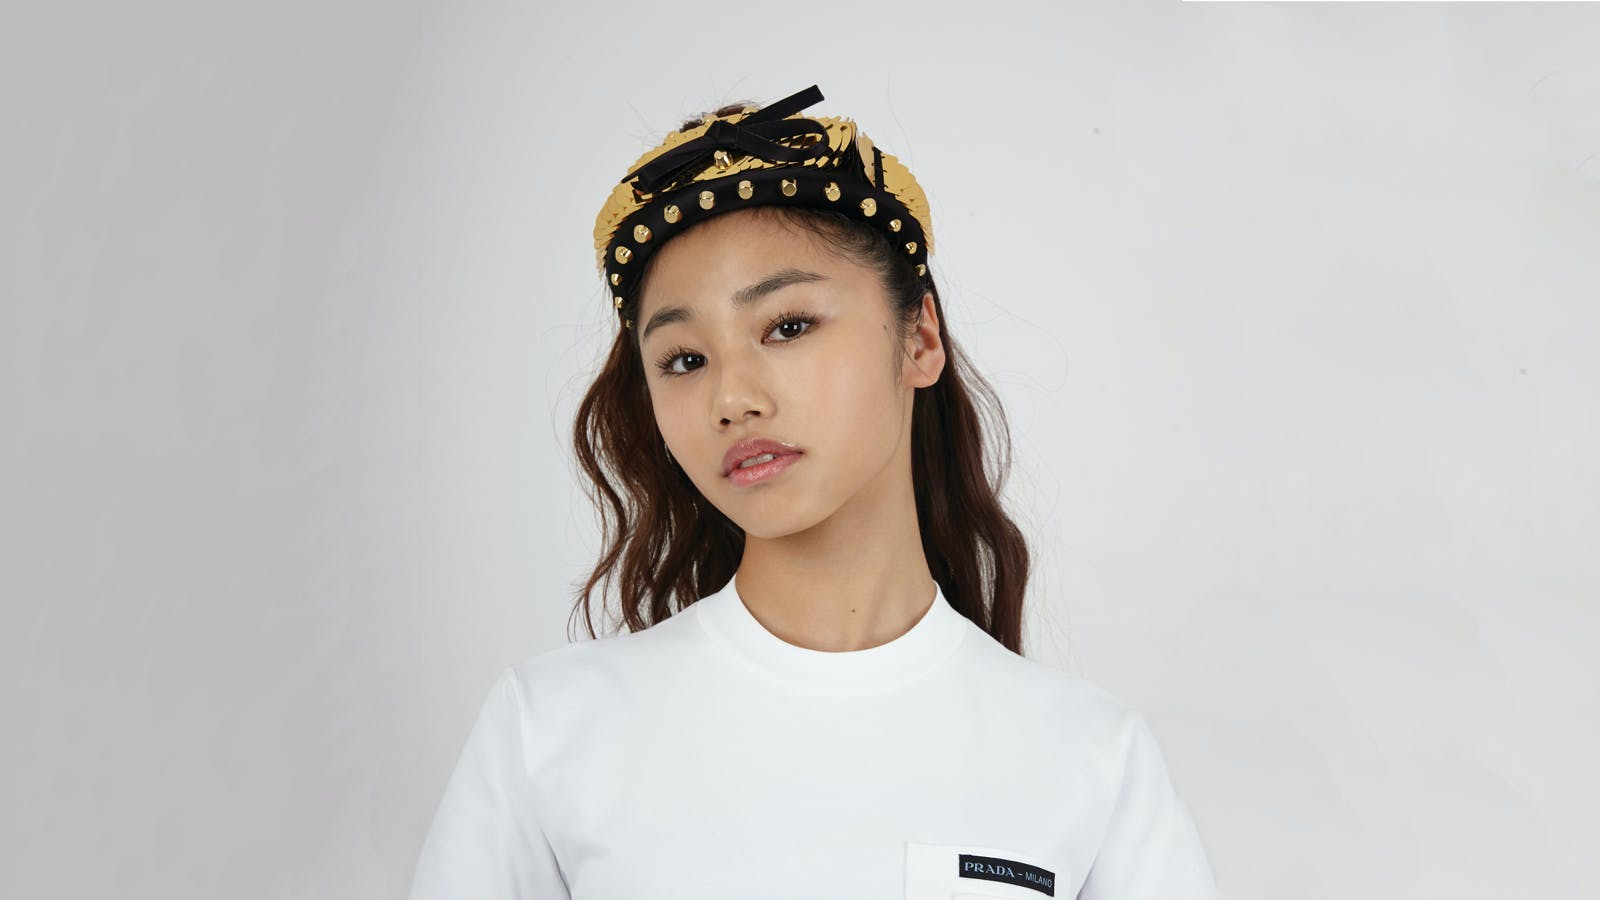 clothing apparel person human sleeve hat headband bandana